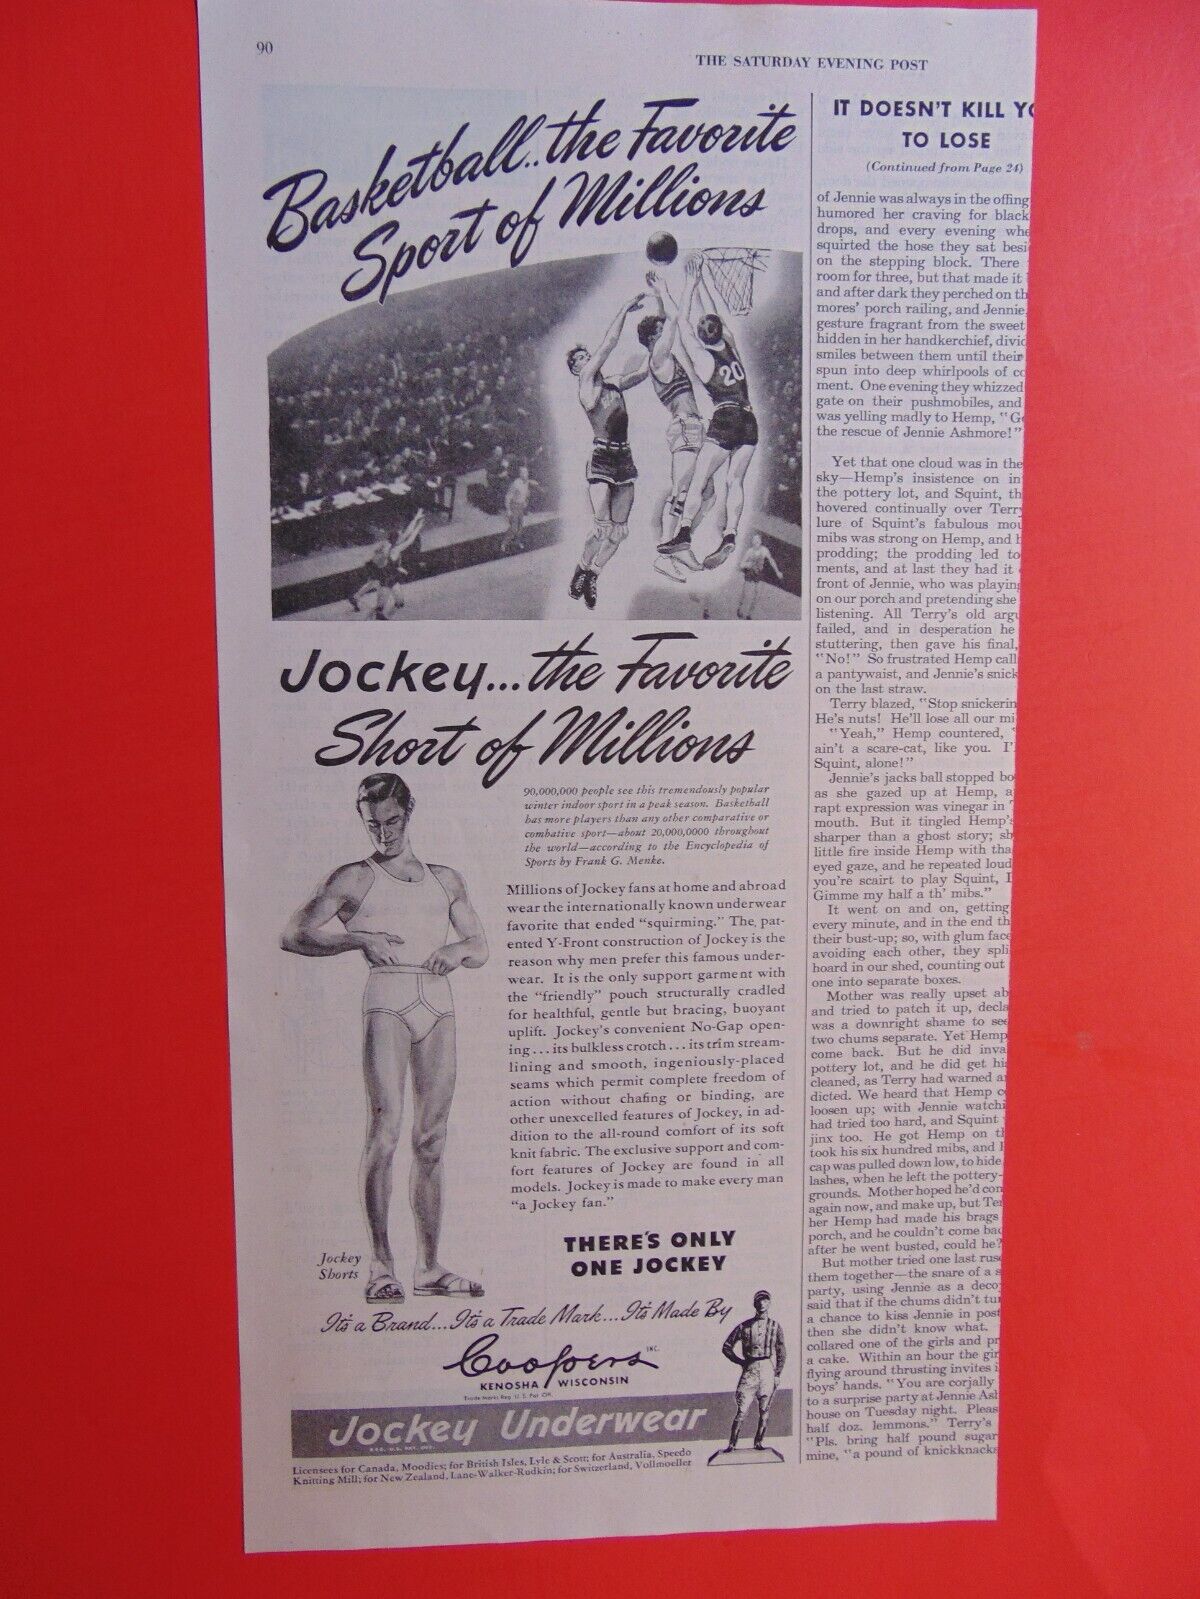 1946 JOCKEY Favorite Short of Millions photo art print ad